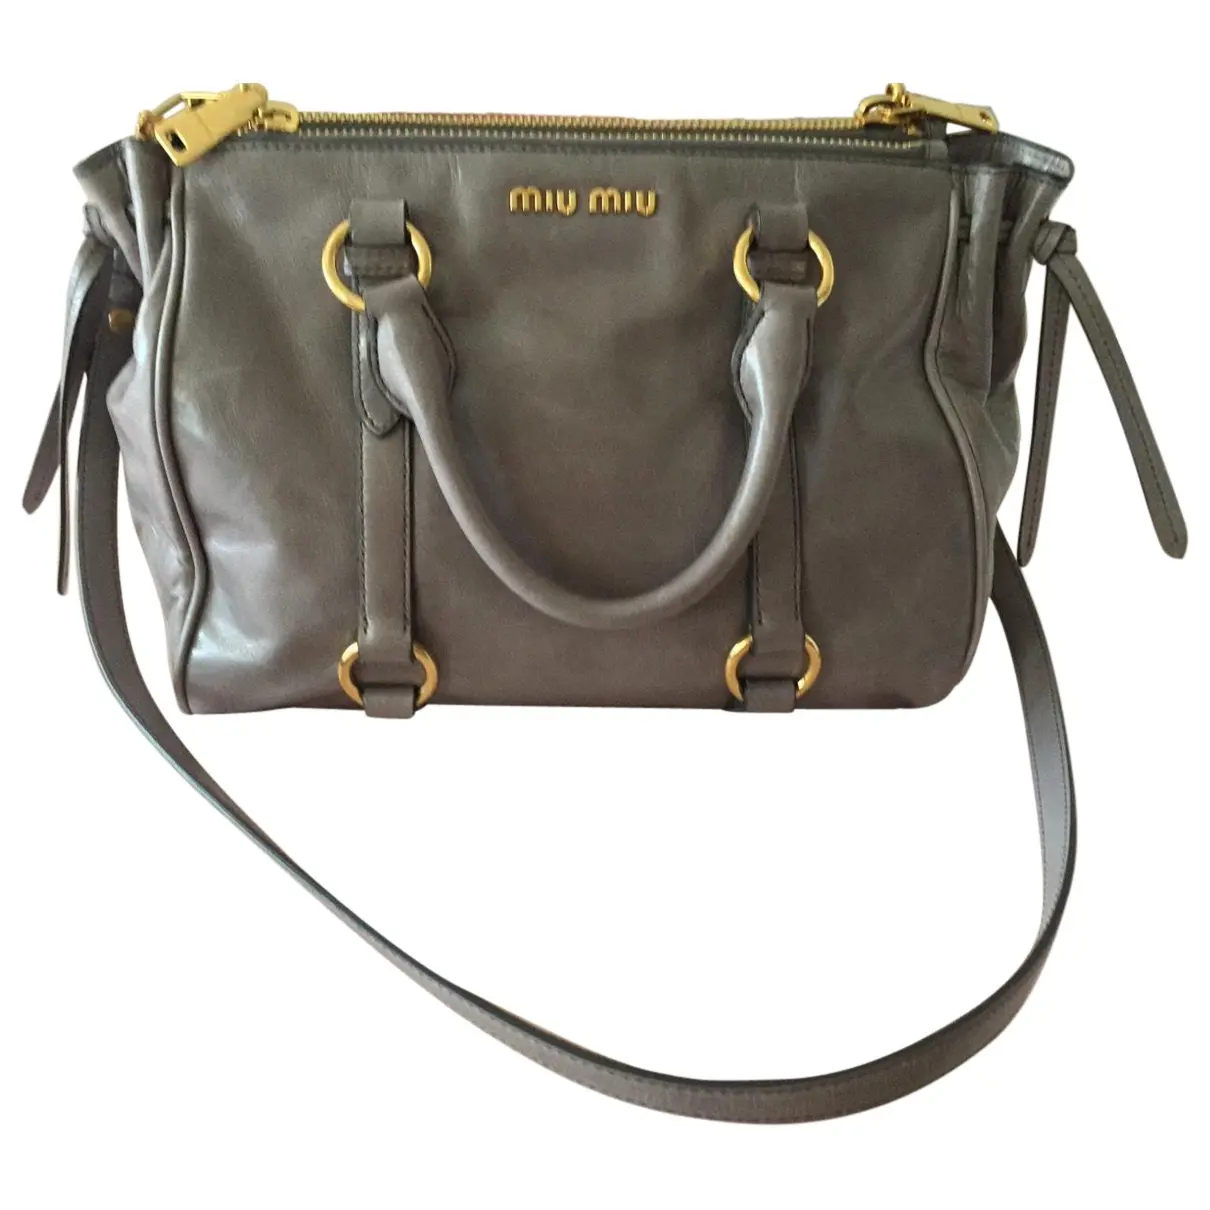 Grey Leather Handbag Vitello Miu Miu